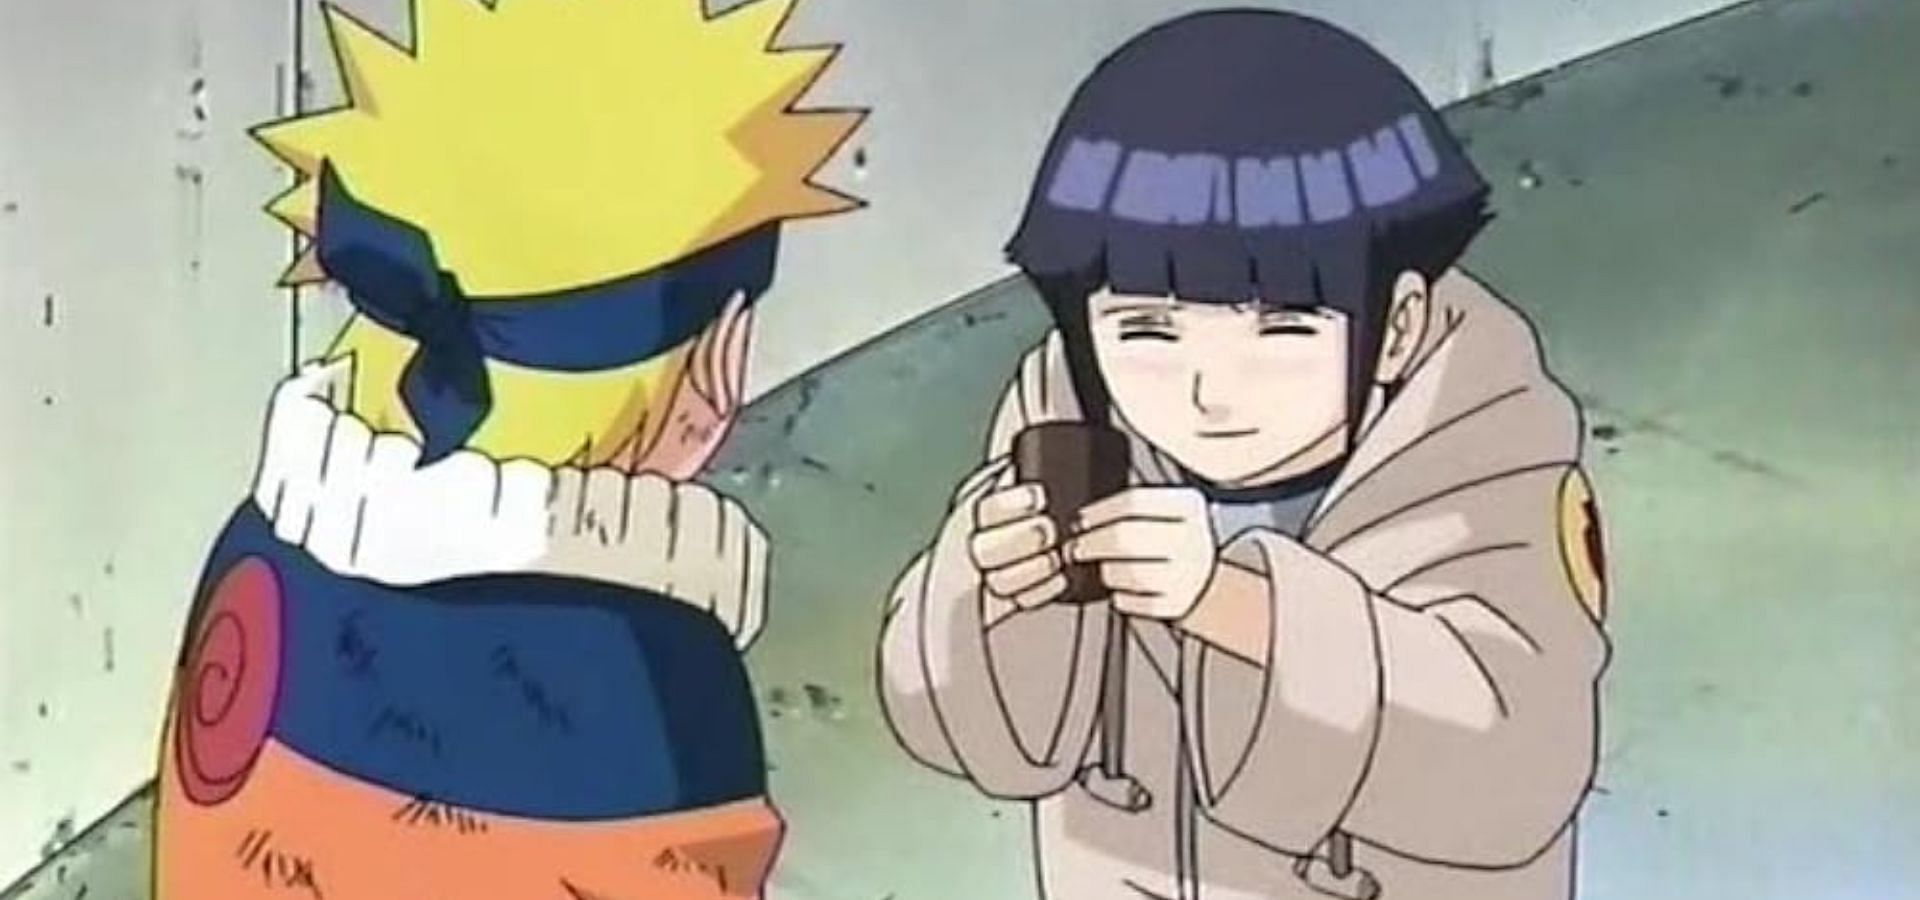 Hinata and Naruto (Image via Pierrot)